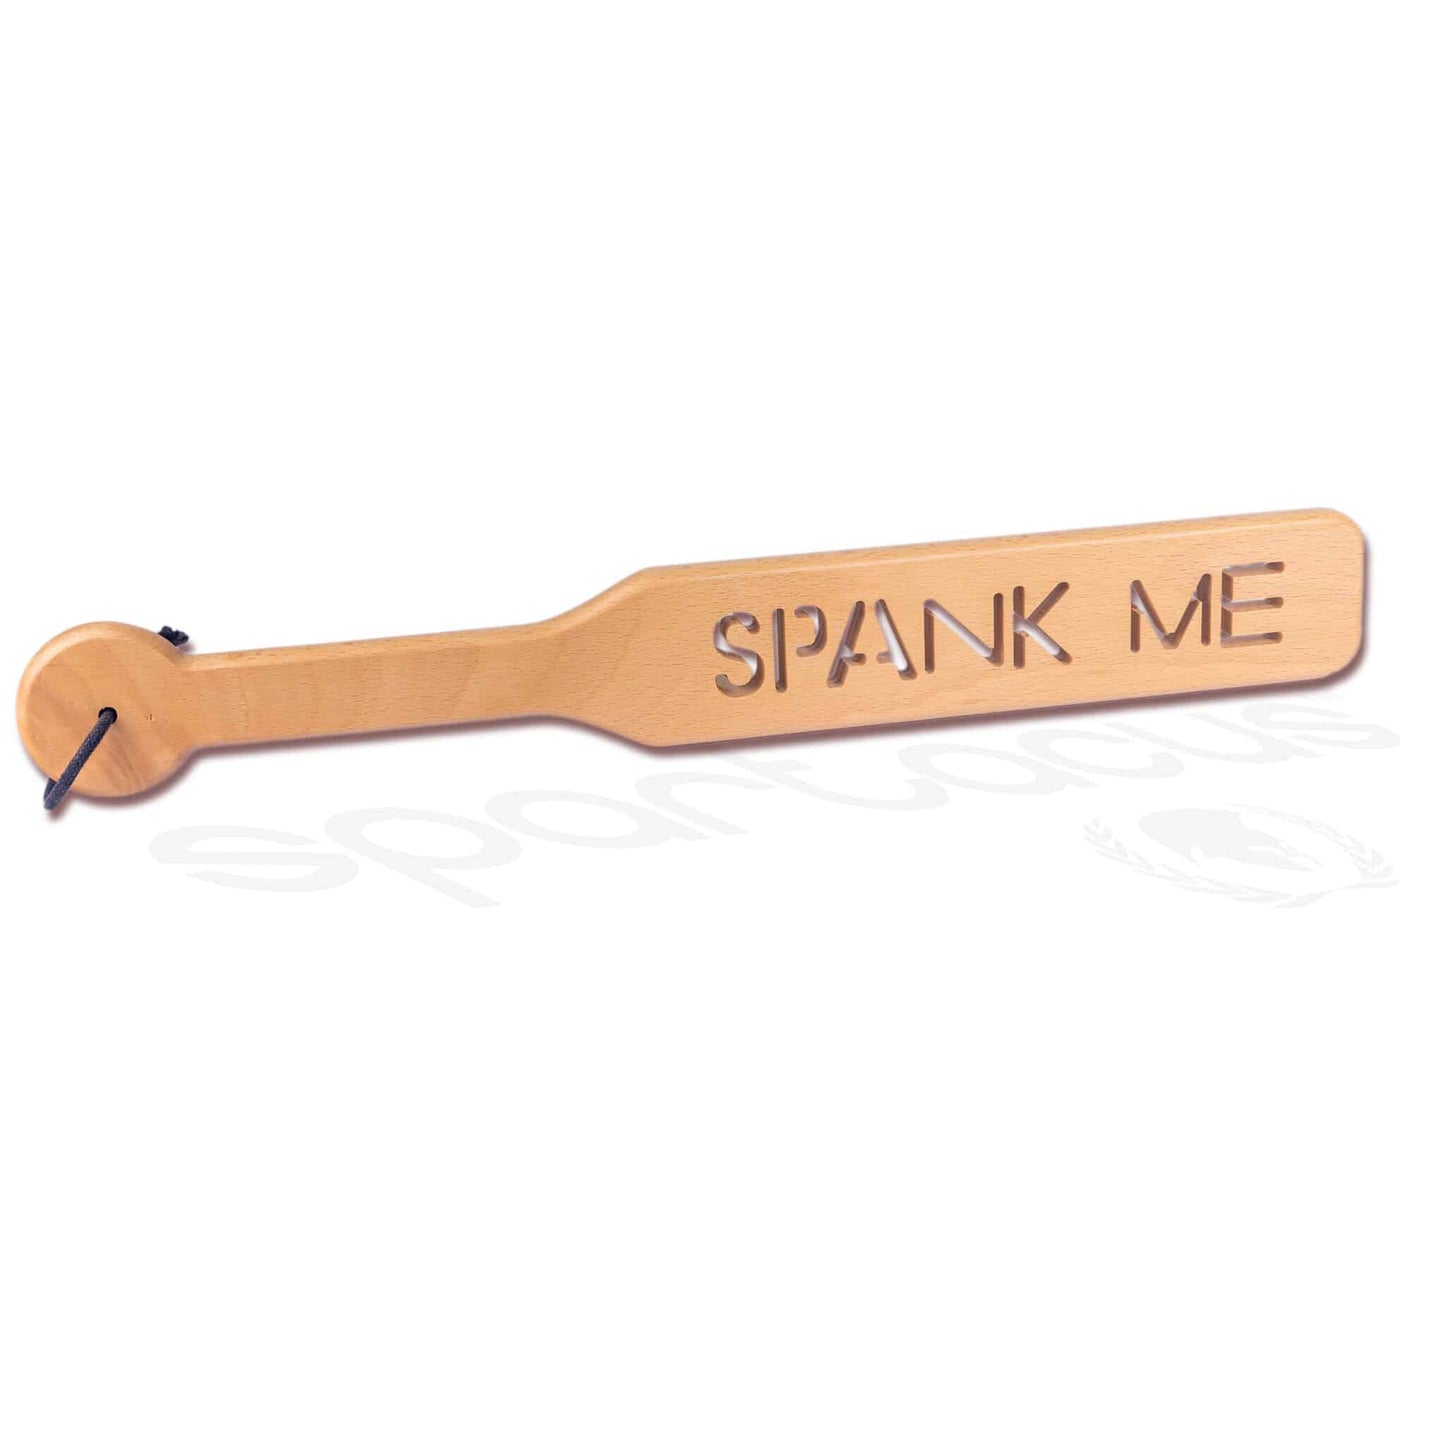 The Spank Me Wood Impression Paddle.